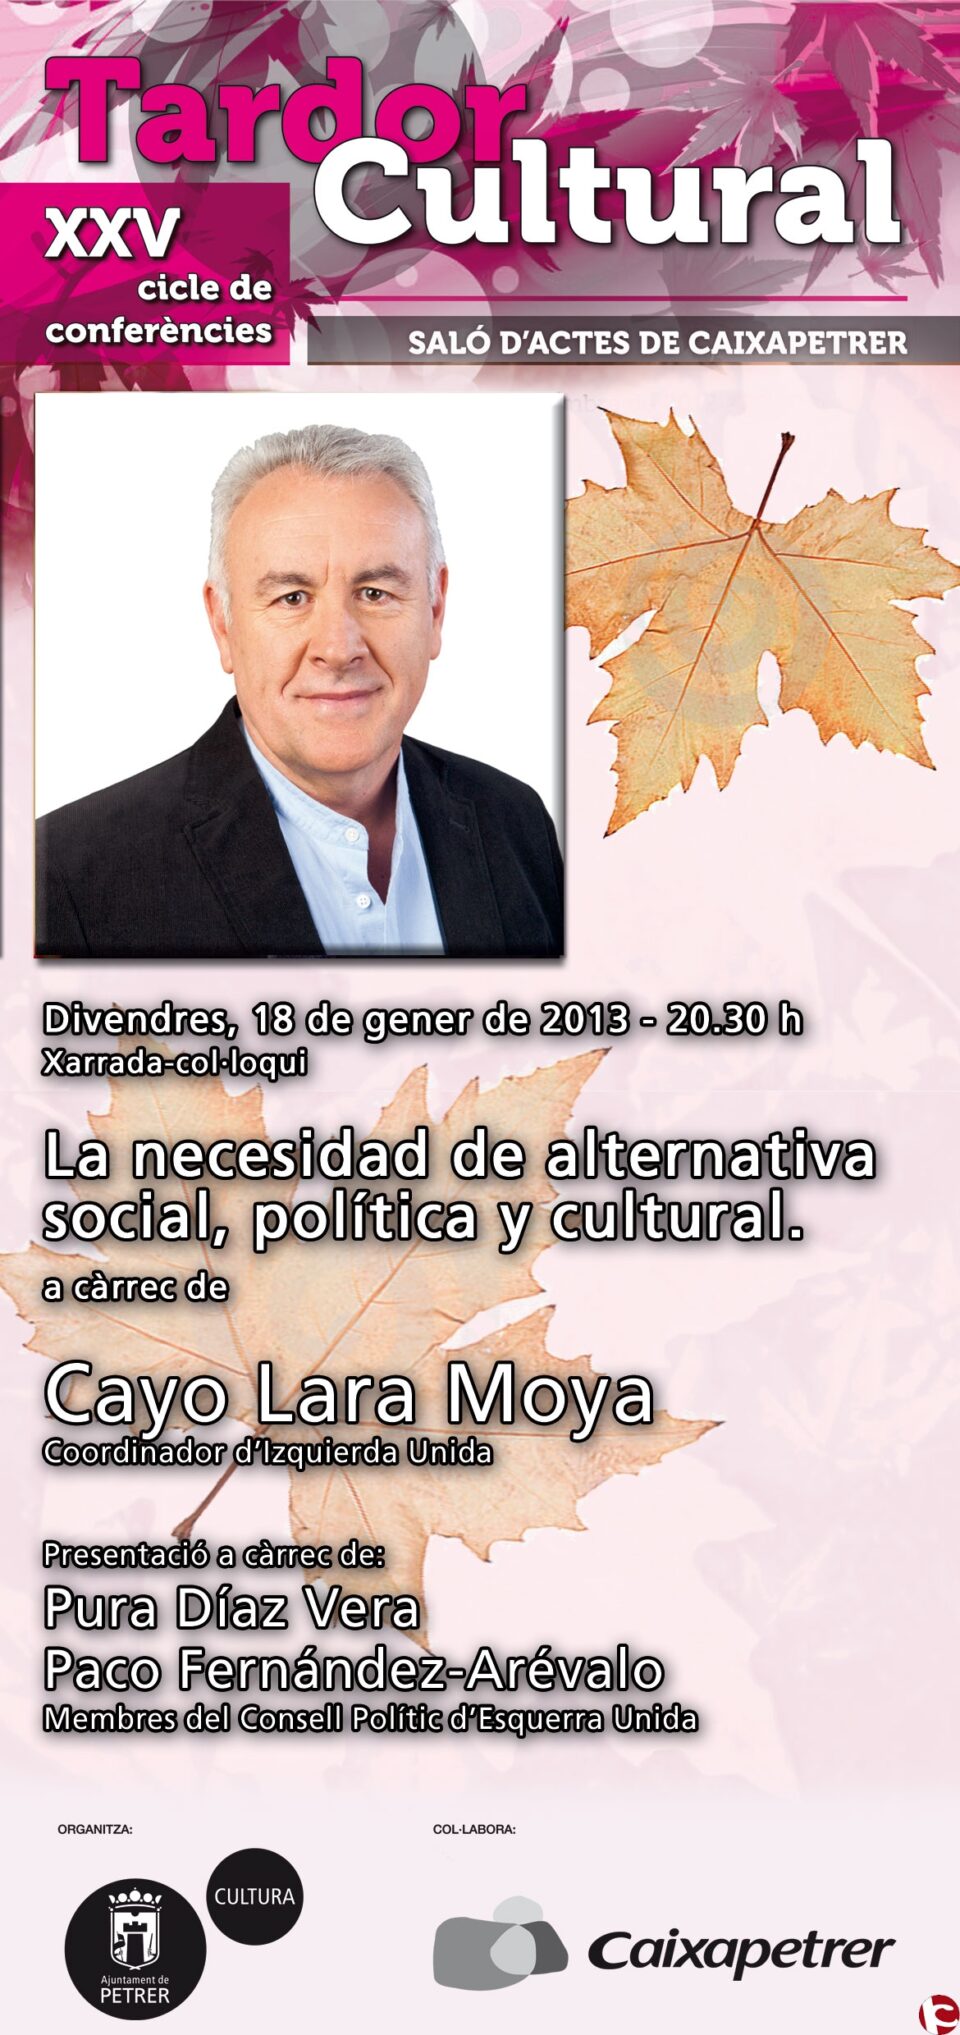 Cayo Lara